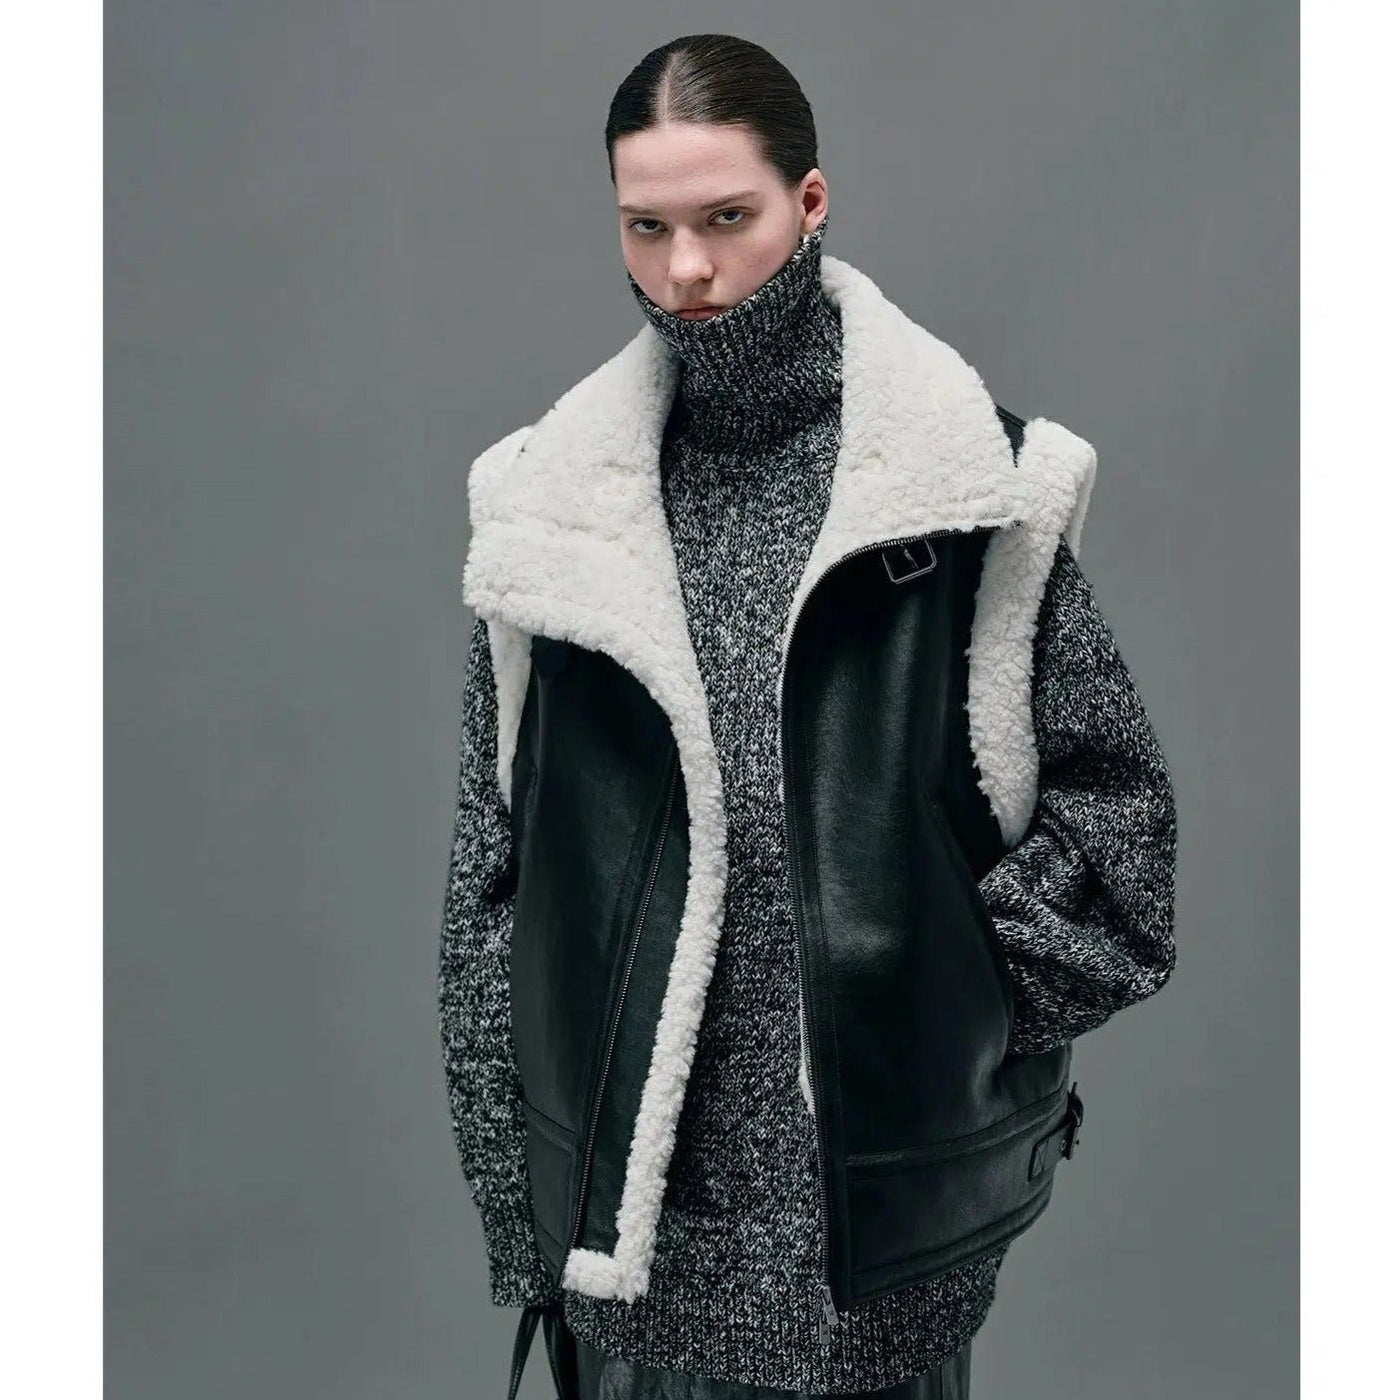 Sherpa PU Leather Vest Korean Street Fashion Vest By NANS Shop Online at OH Vault